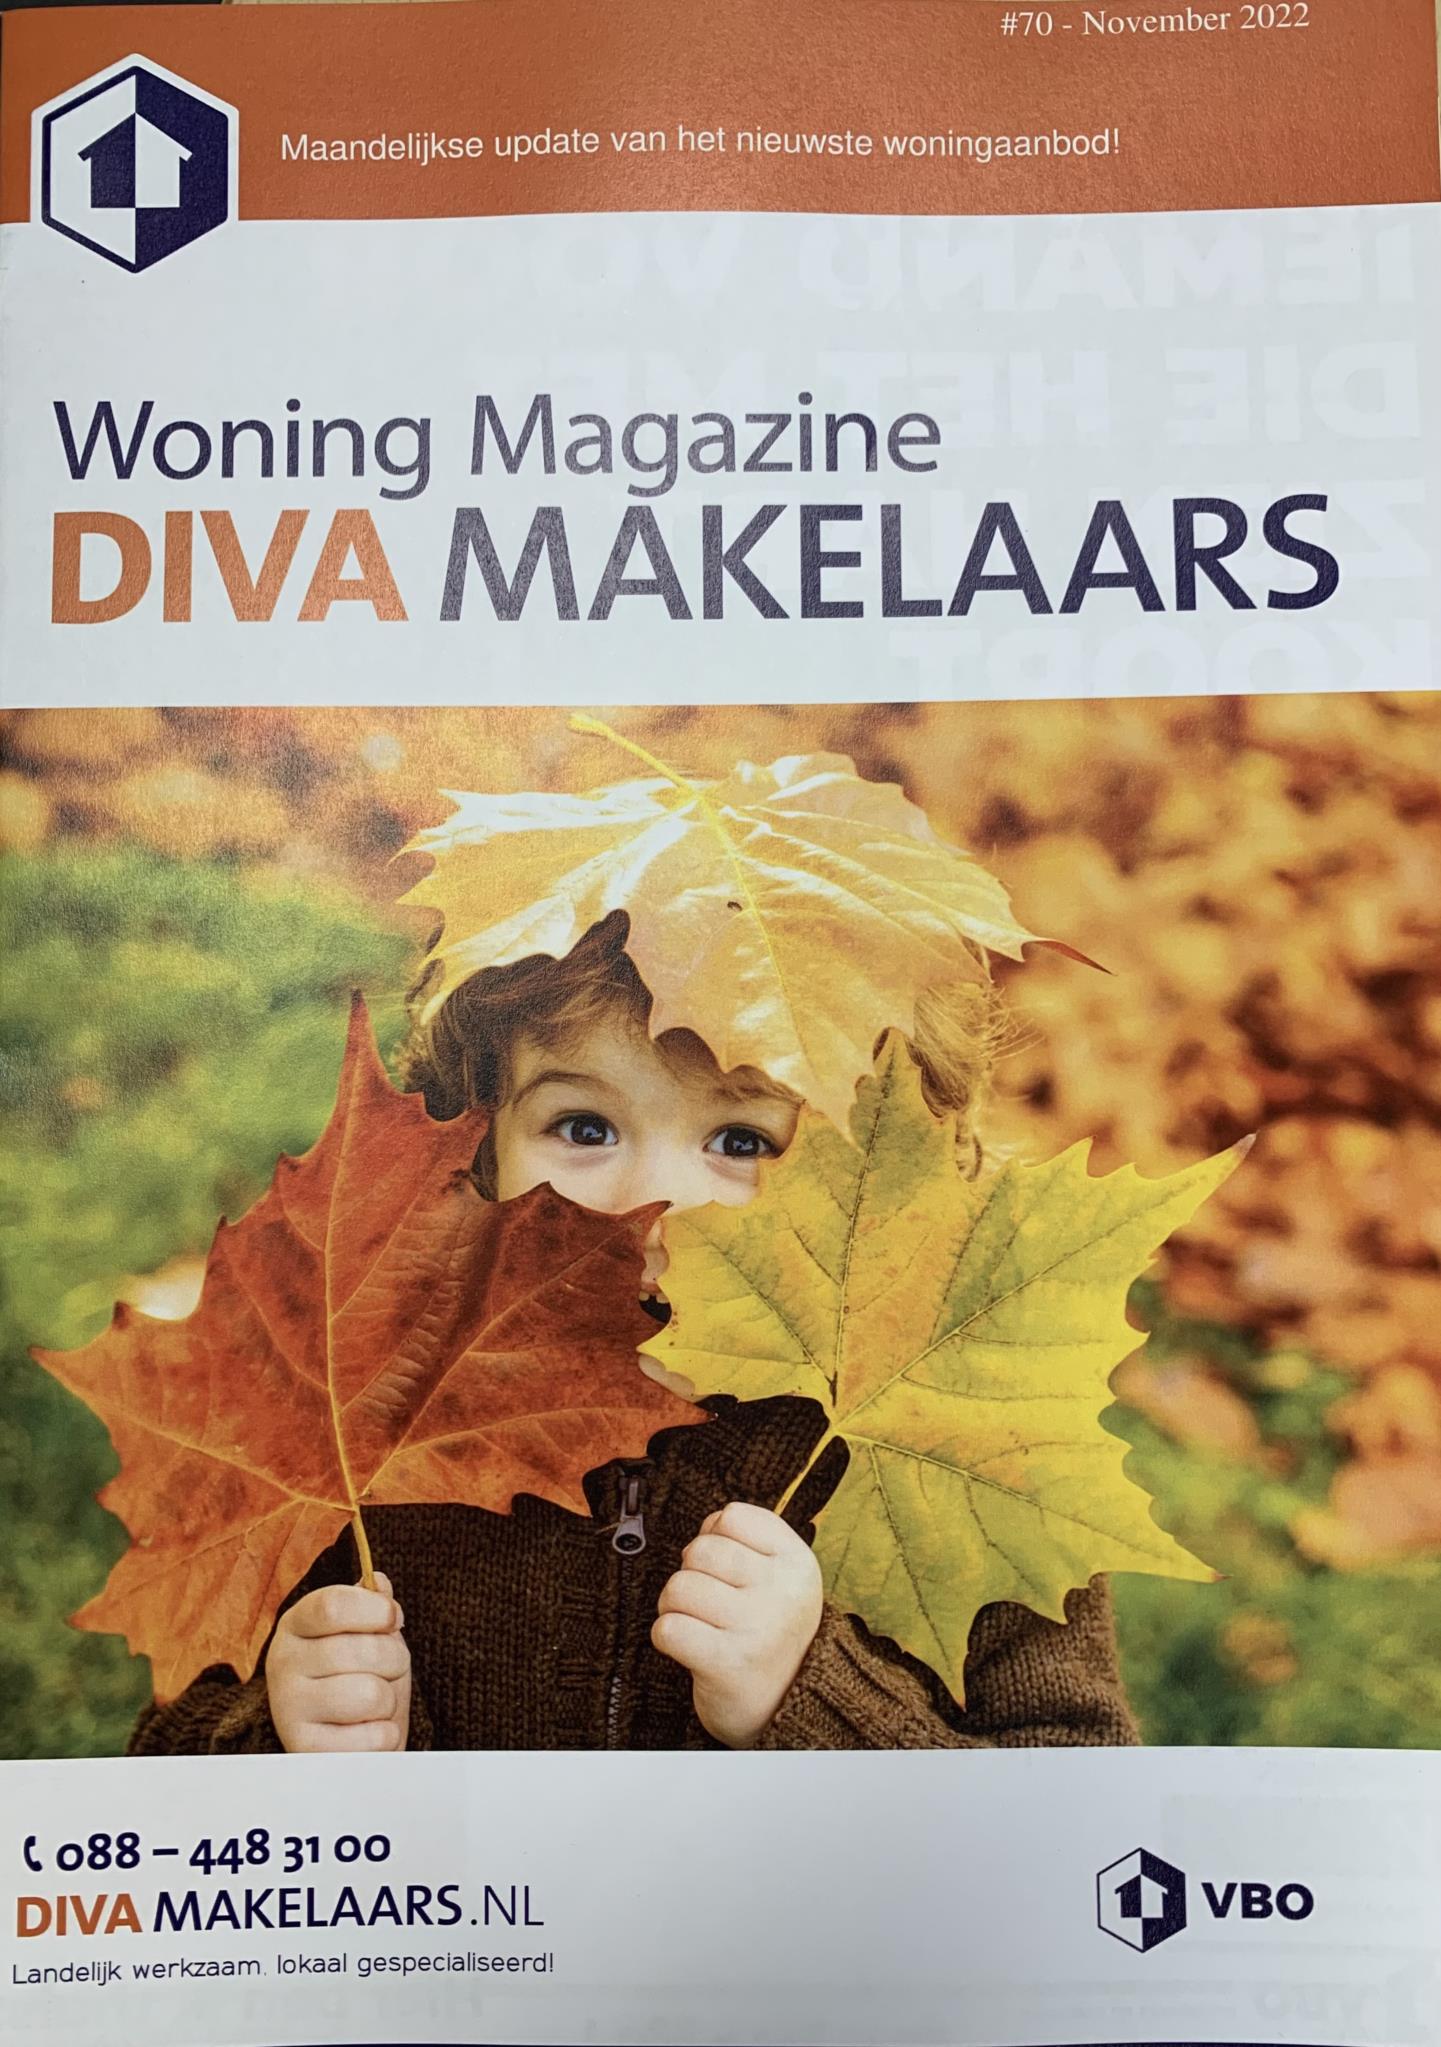 DIVA Makelaars Woningmagazine ligt weer voor u klaar!